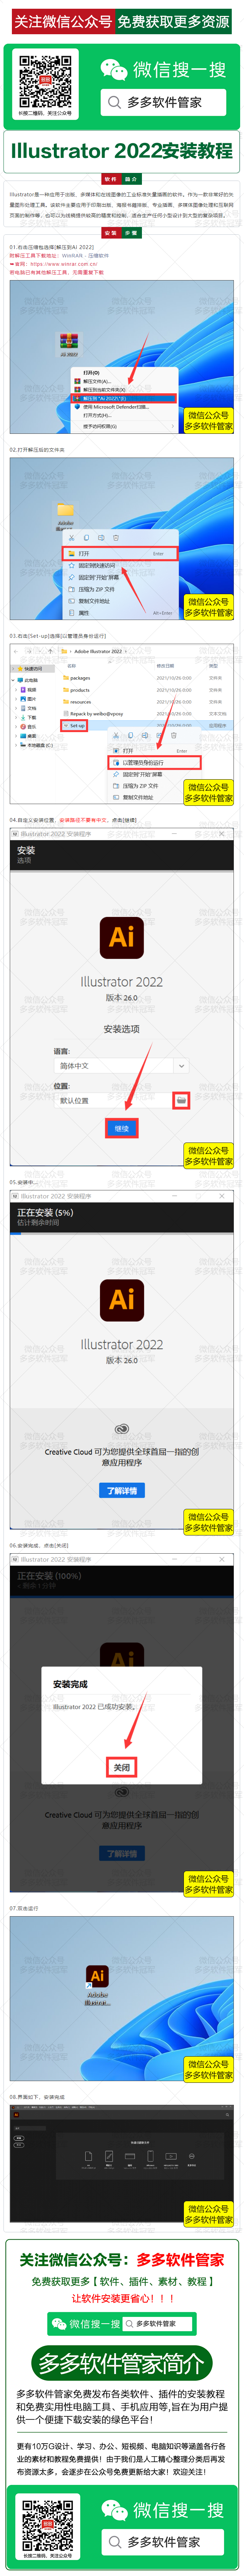 Illustrator 2022安装步骤.png